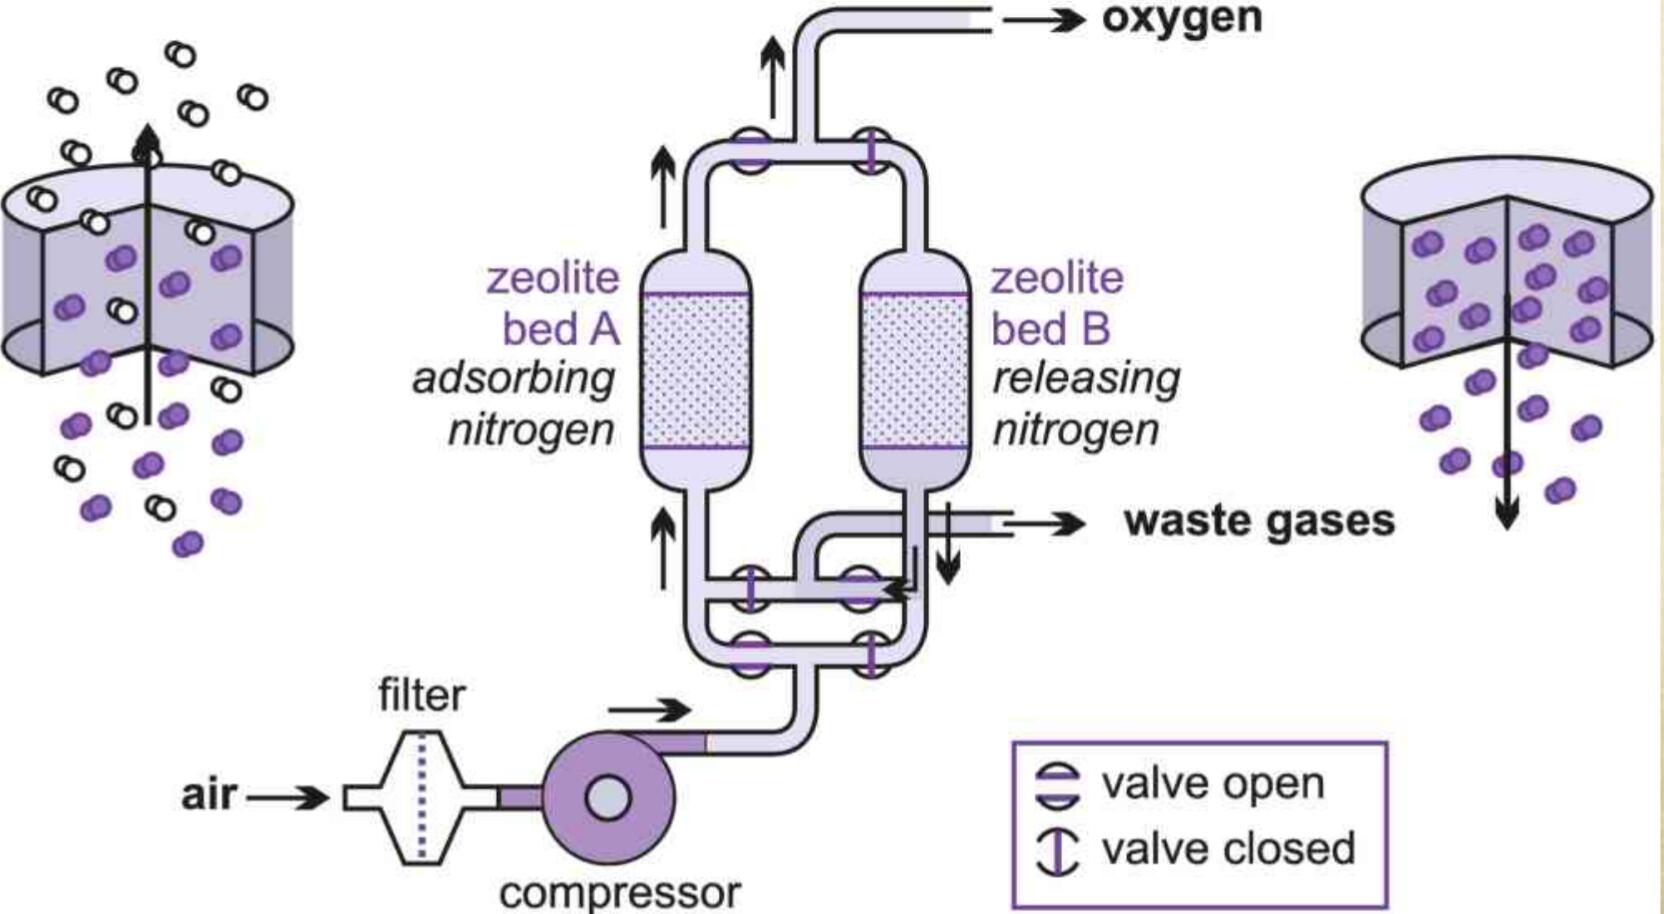 PSA, VPSA Process and Oxygen Zeolite Introduction